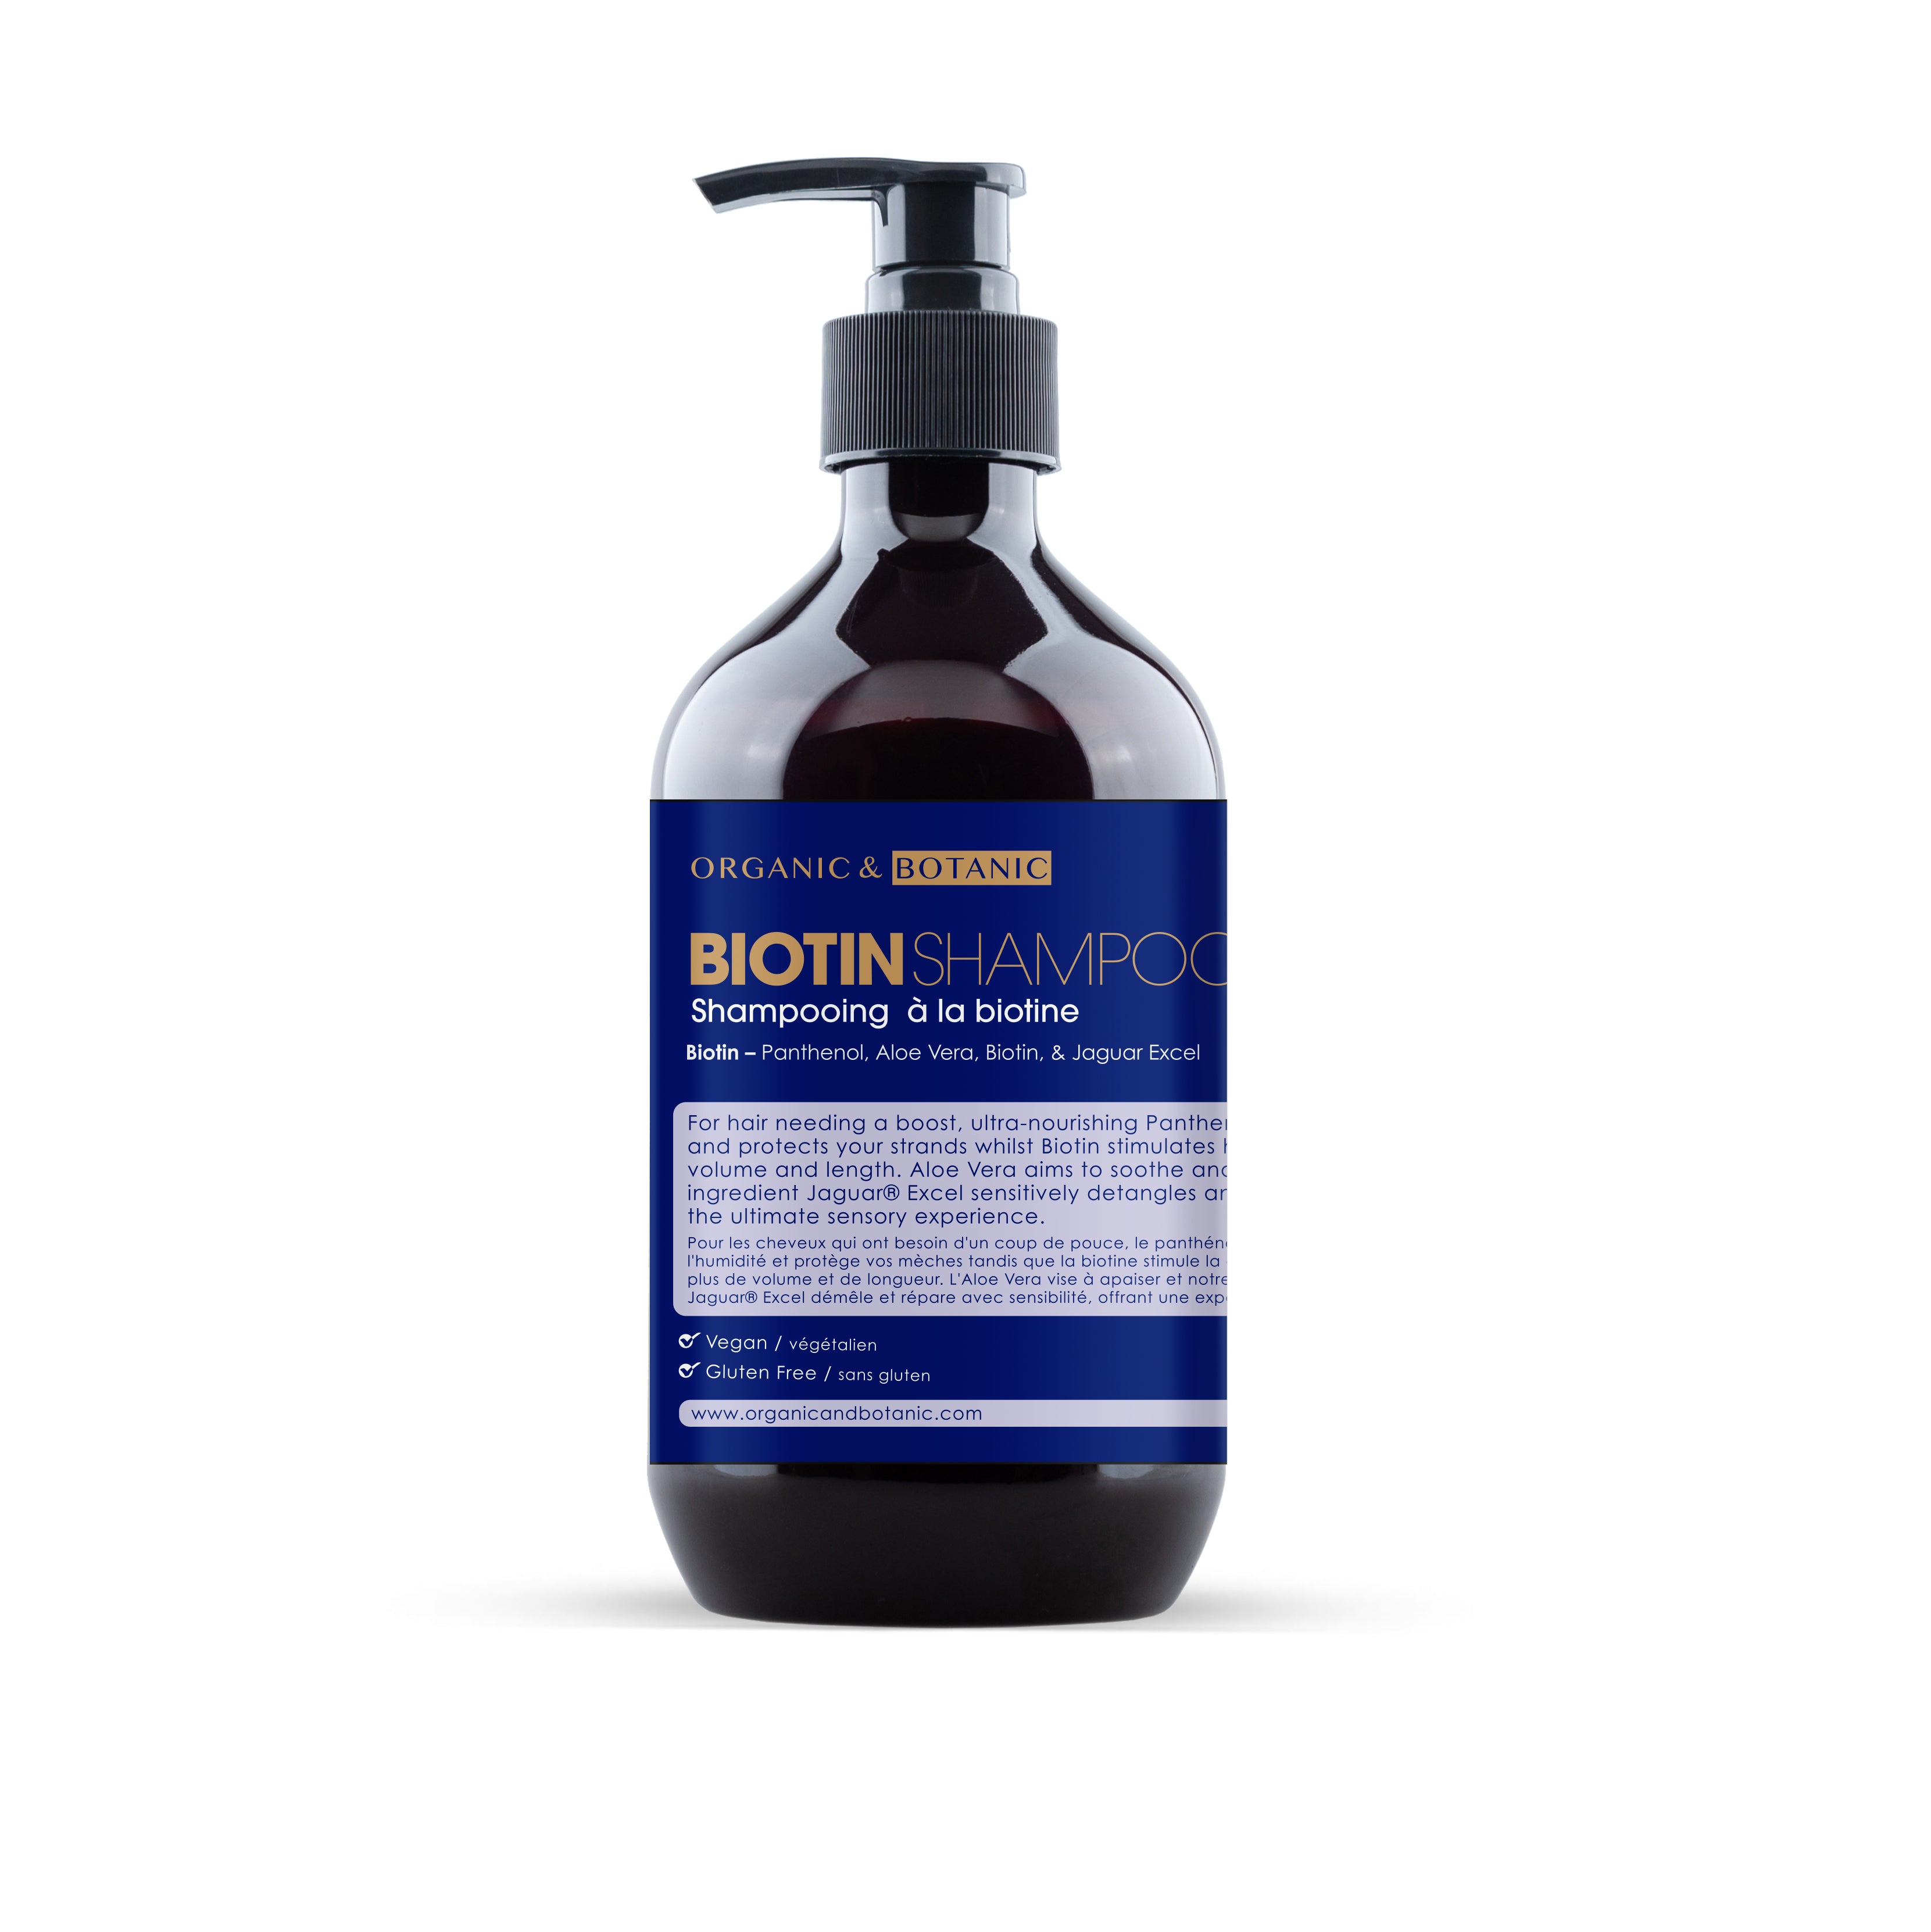 Biotin Shampoo + Conditioner